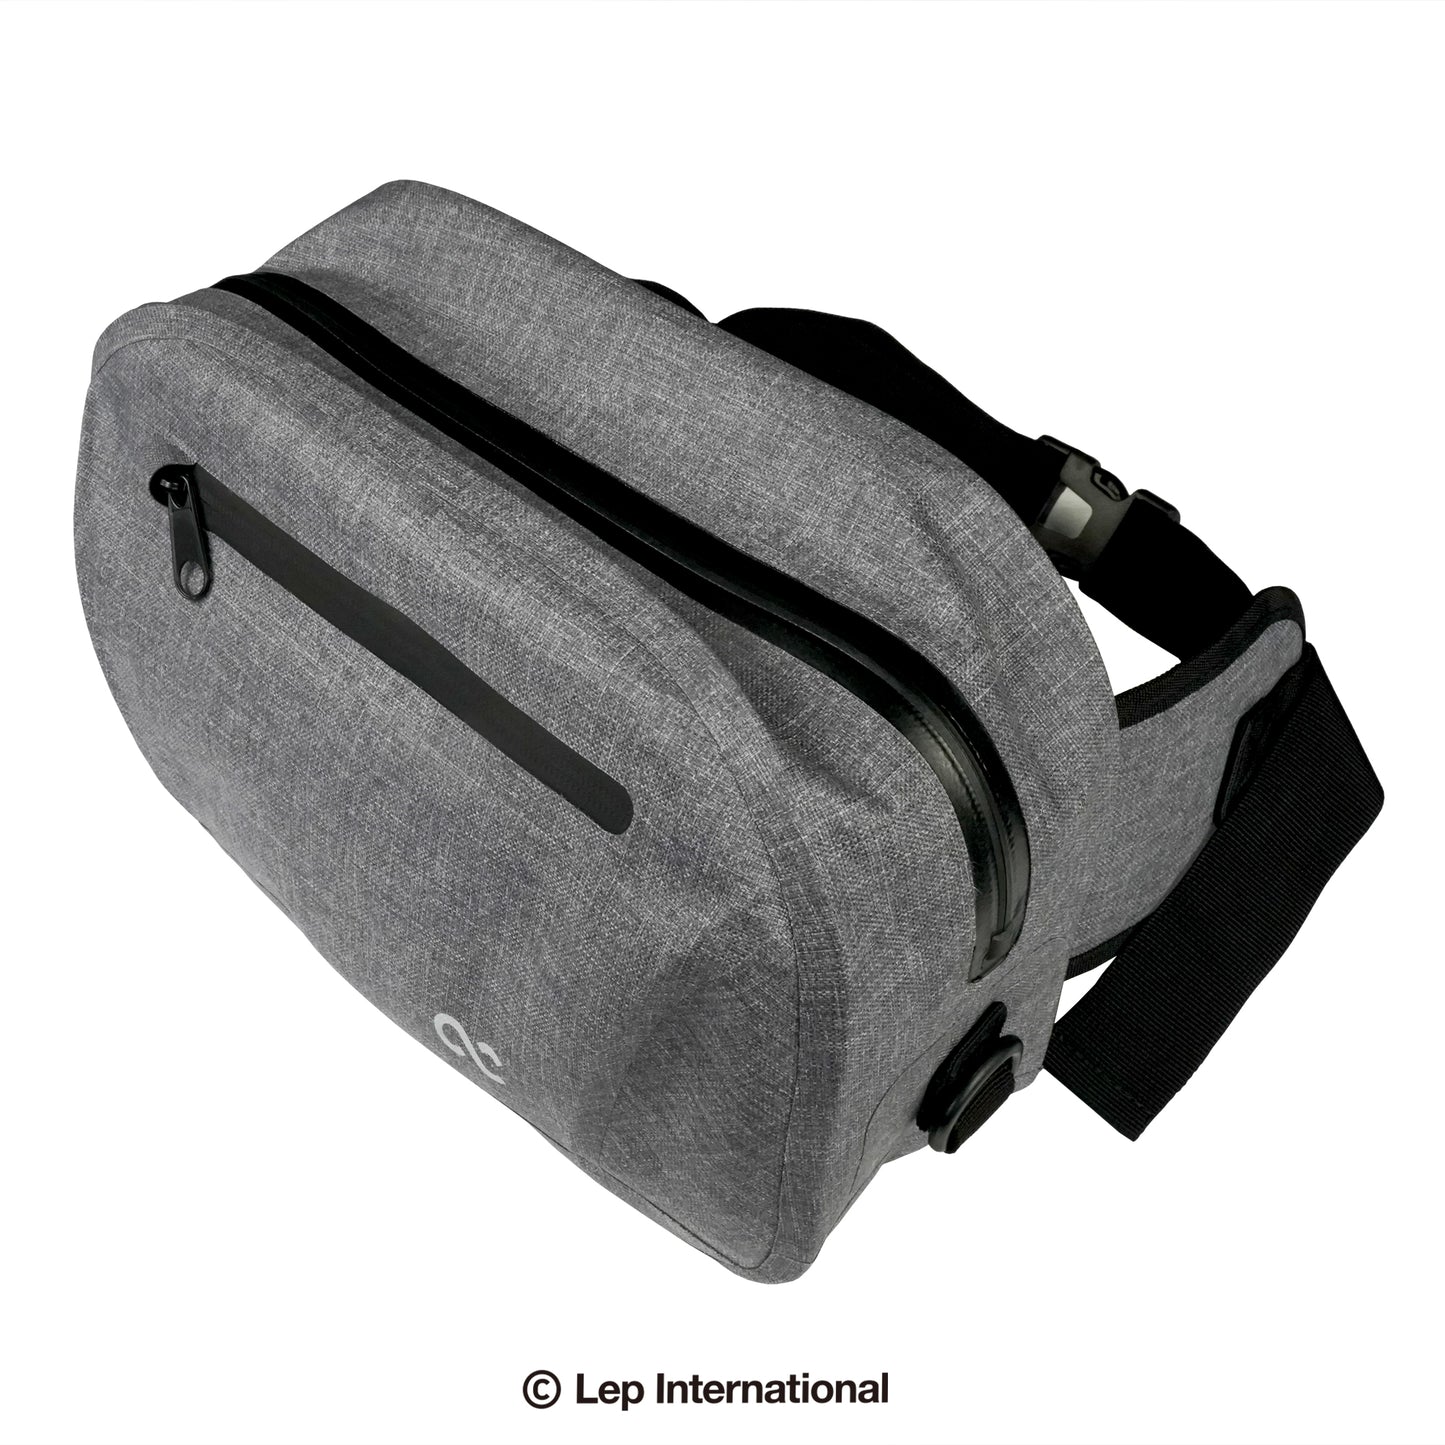 One Control Waterproof Sling Tail Bag